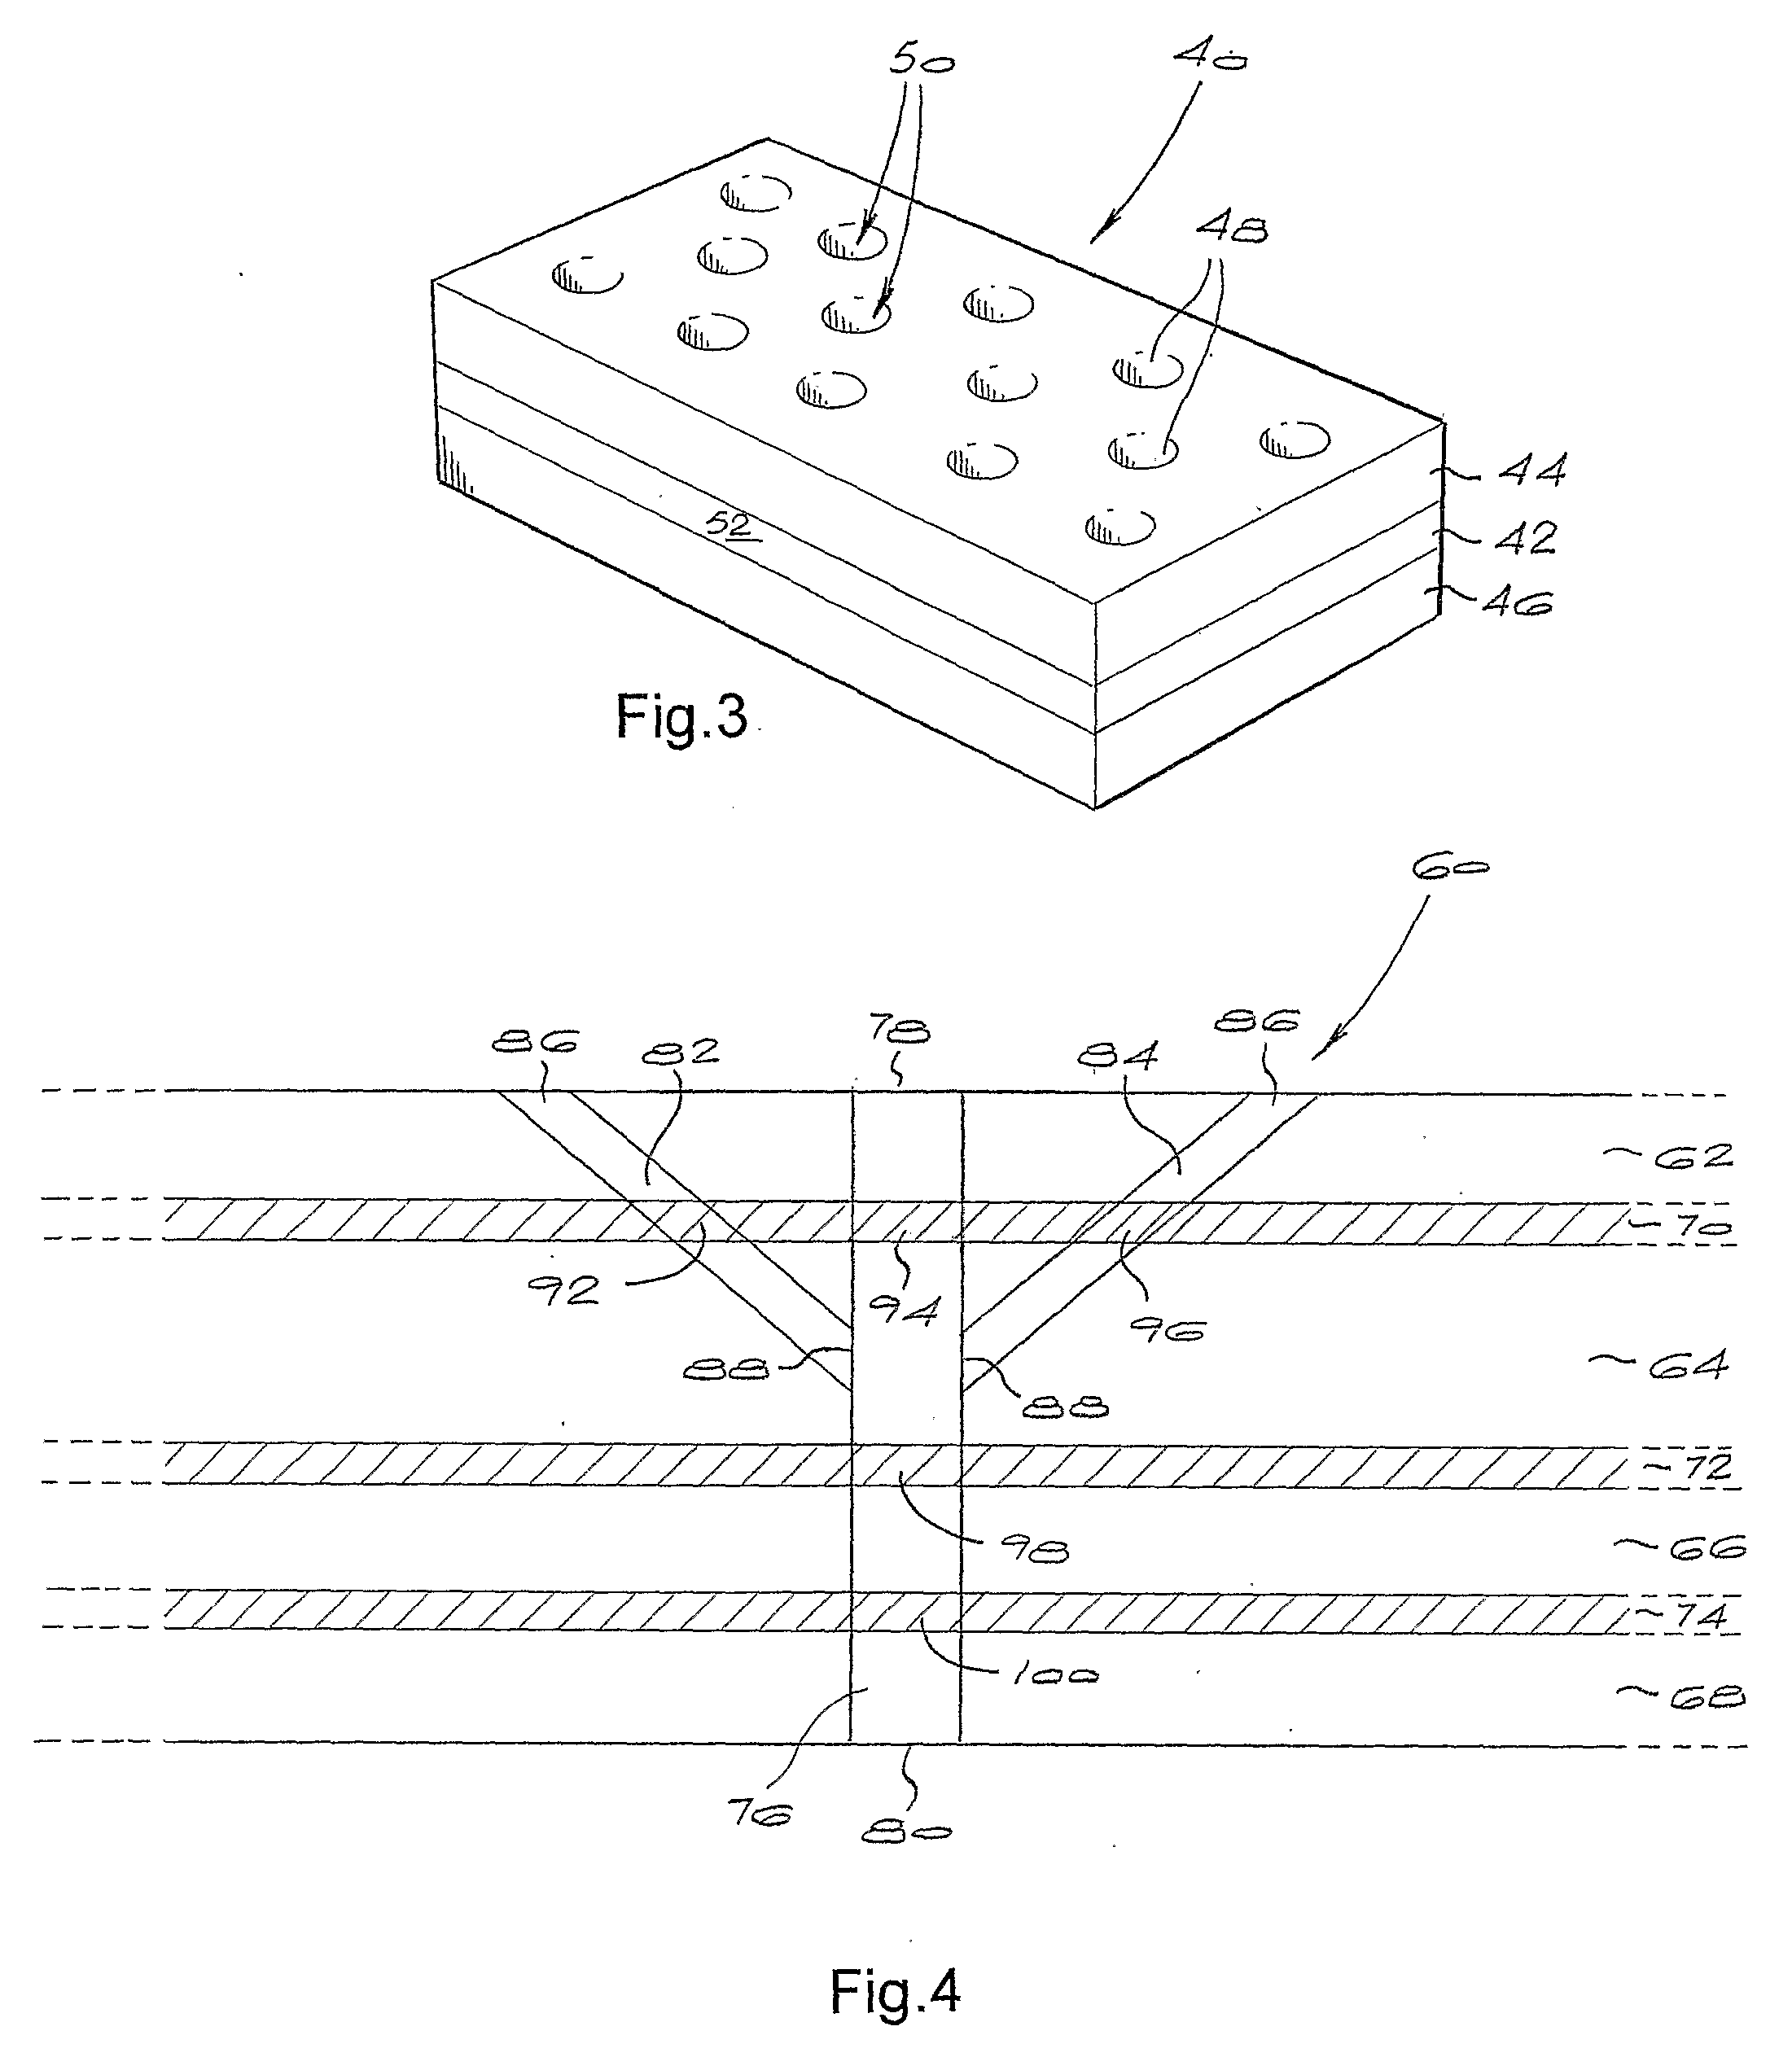 Microelectrode array